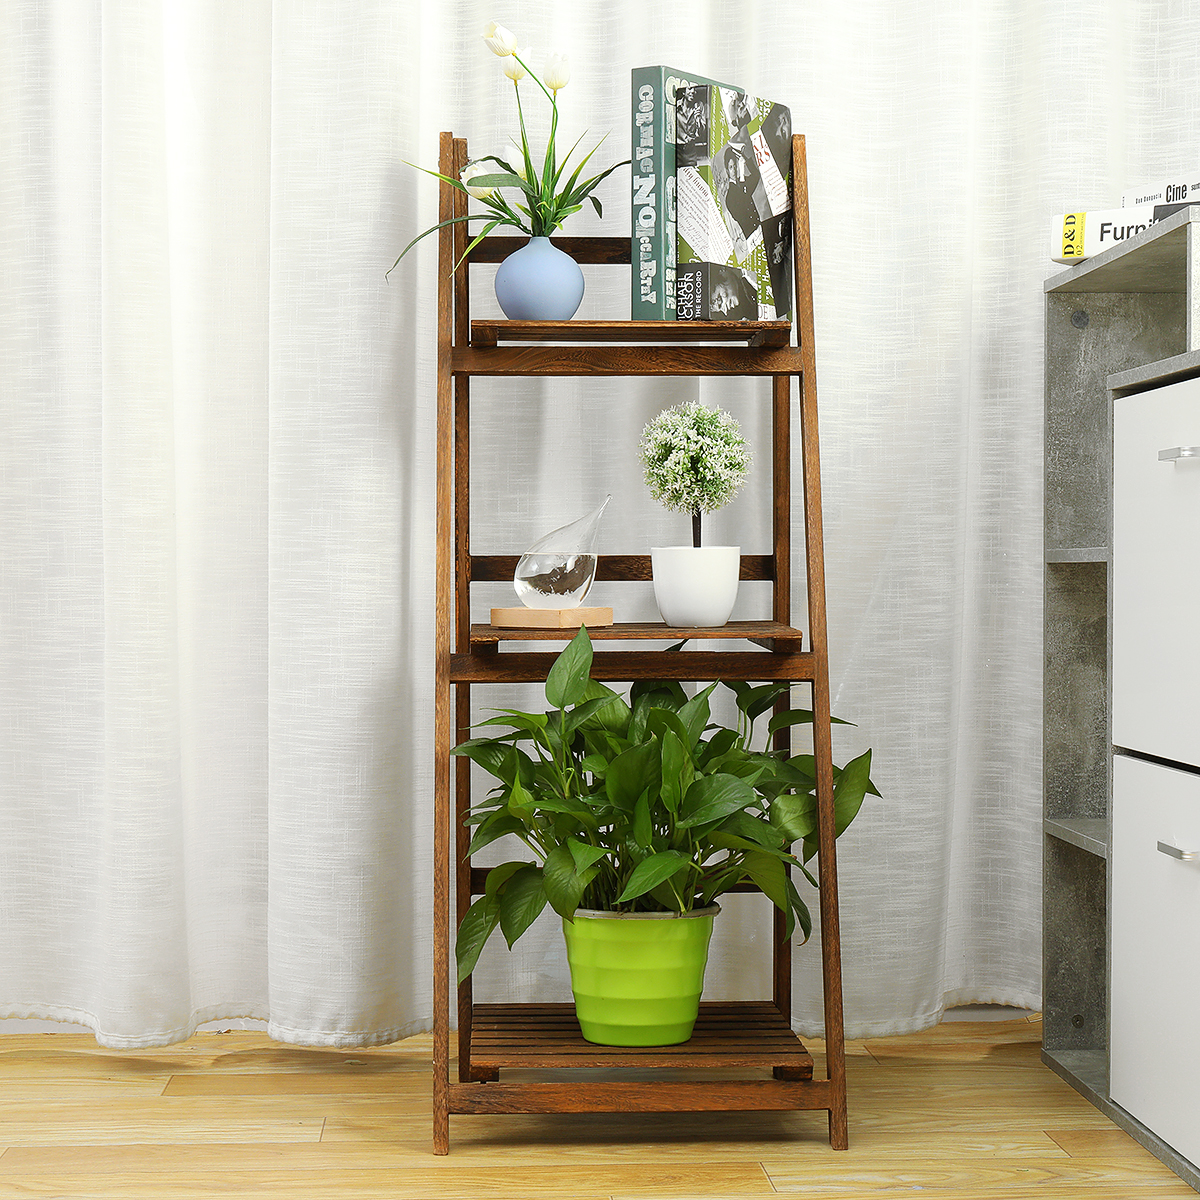 3 Tiers Ladder Storage Shelf Foldable Plant Flower Pot Display Stand Bookshelf Storage Rack Home Office Furniture